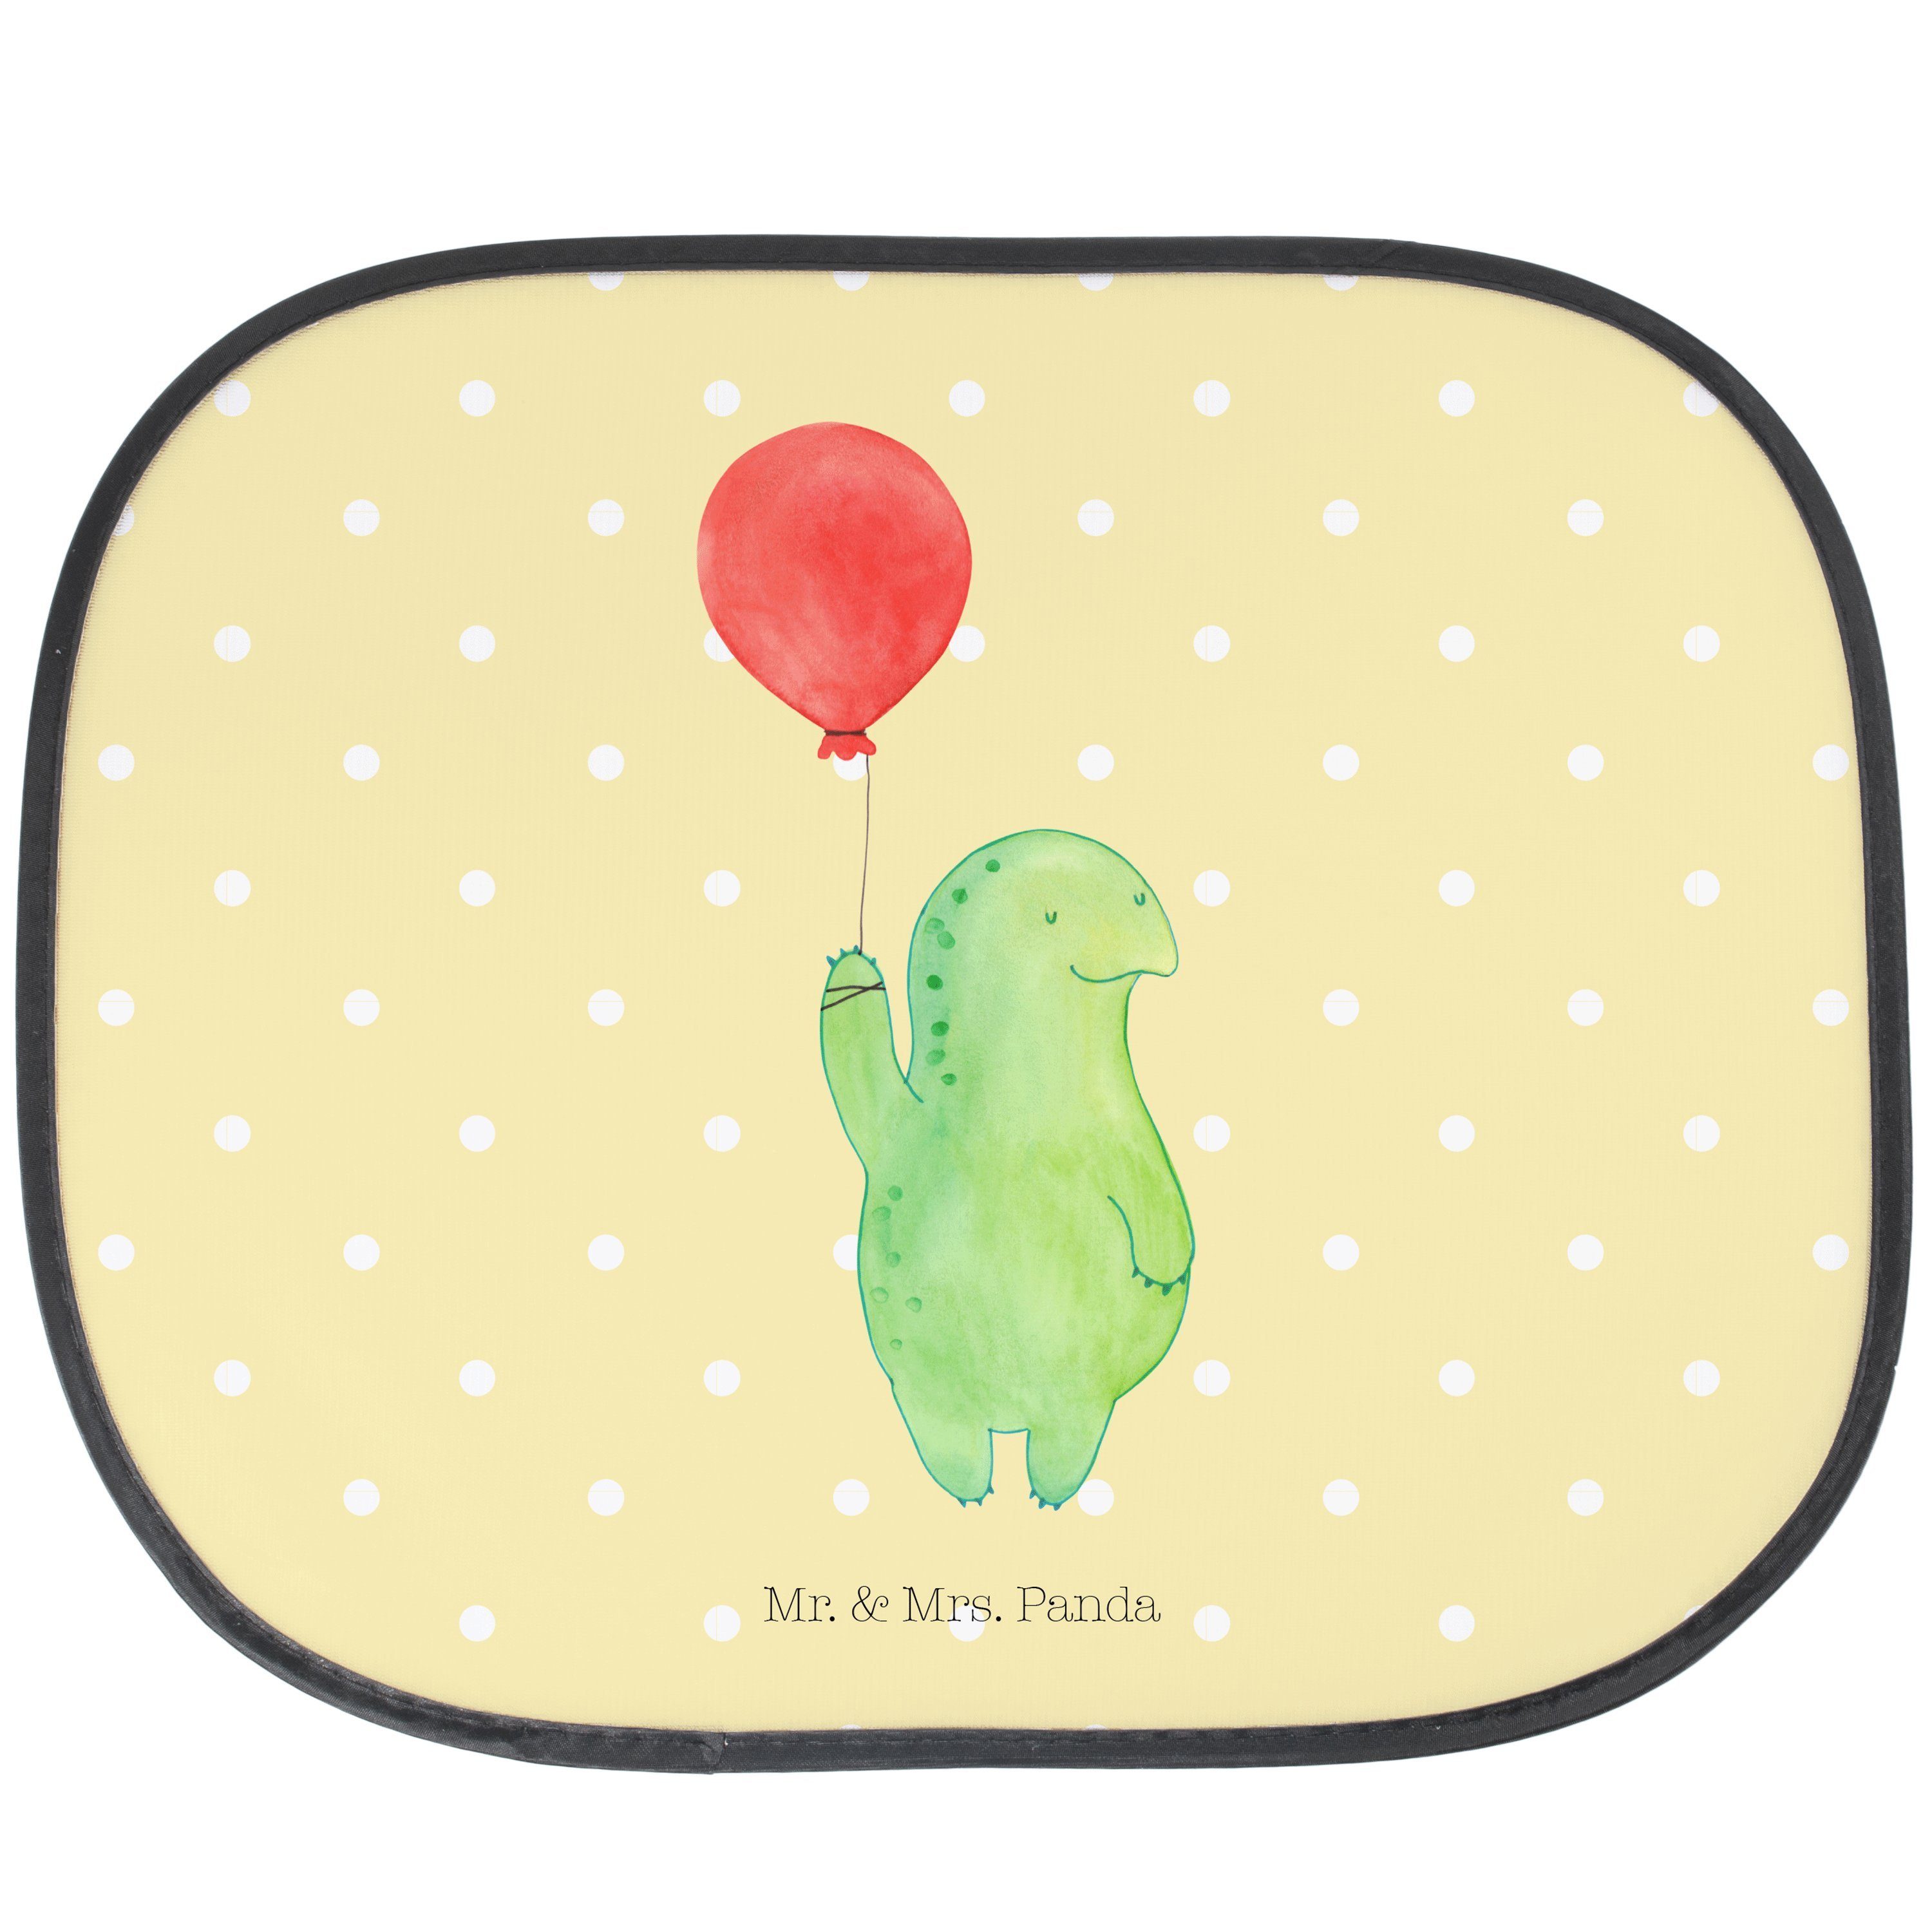 Sonnenschutz Schildkröte Luftballon - Gelb Pastell - Geschenk, Schildkröten, Sonne, Mr. & Mrs. Panda, Seidenmatt